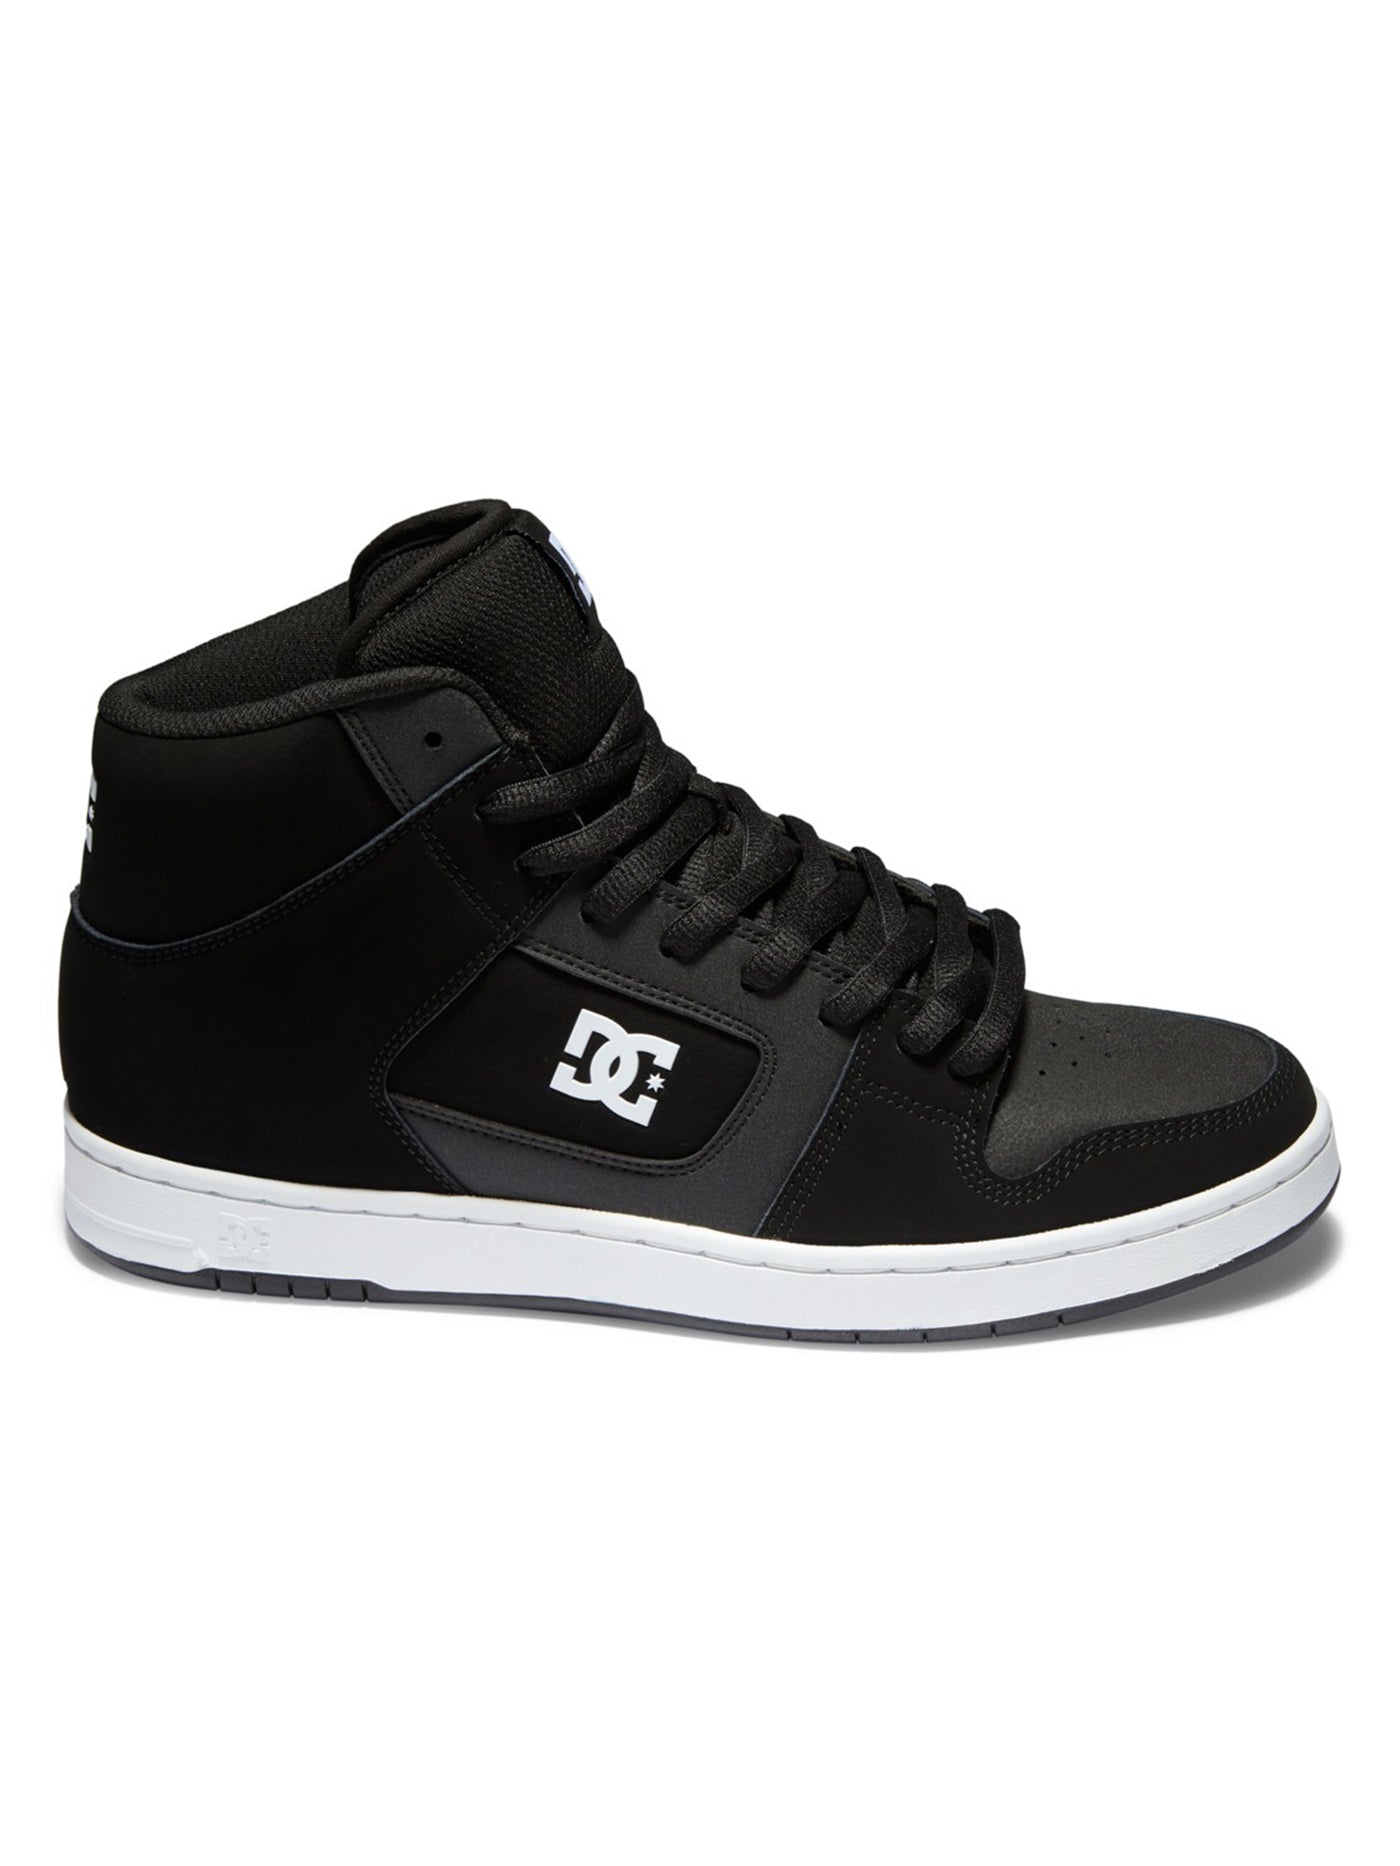 DC Manteca 4 Hi Black/White Shoes